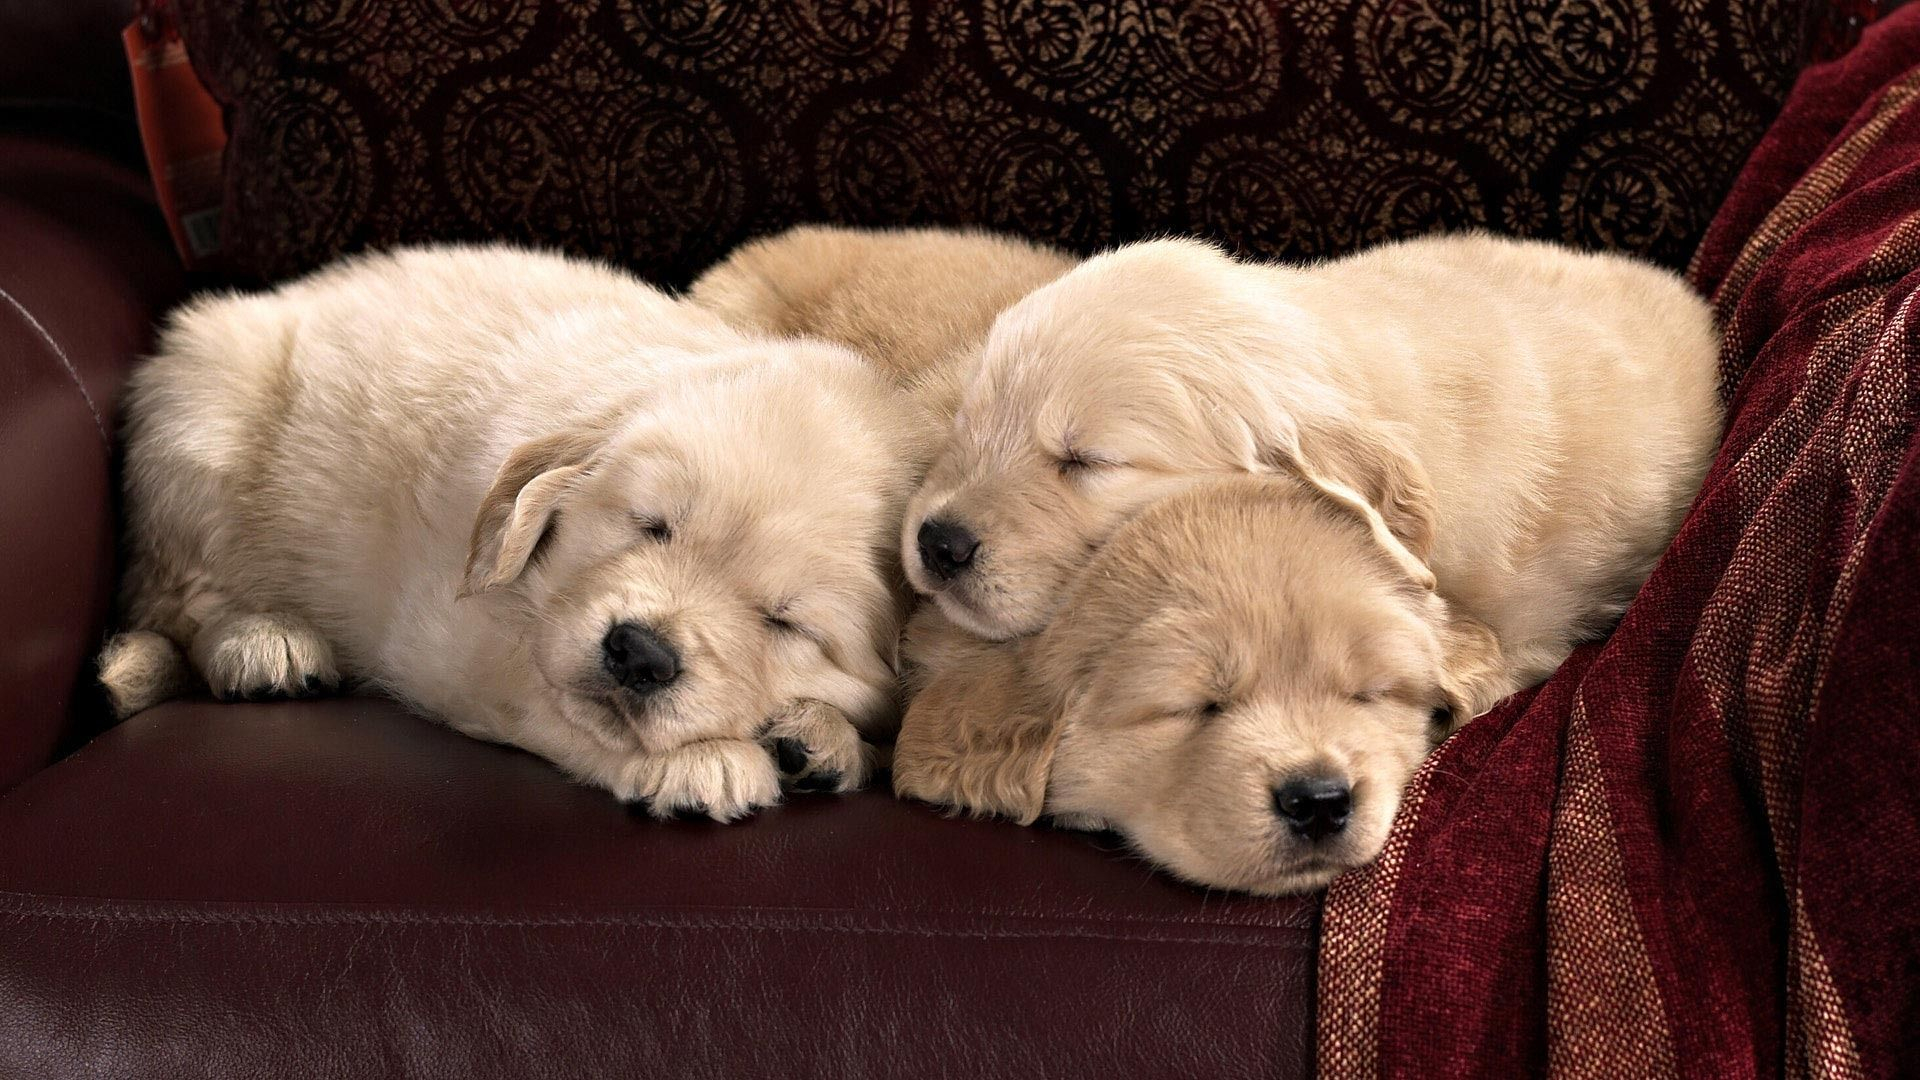 1920x1080 Sleeping Golden Retriever puppies wallpaper | Puppies, Dog images hd, Cute dogs